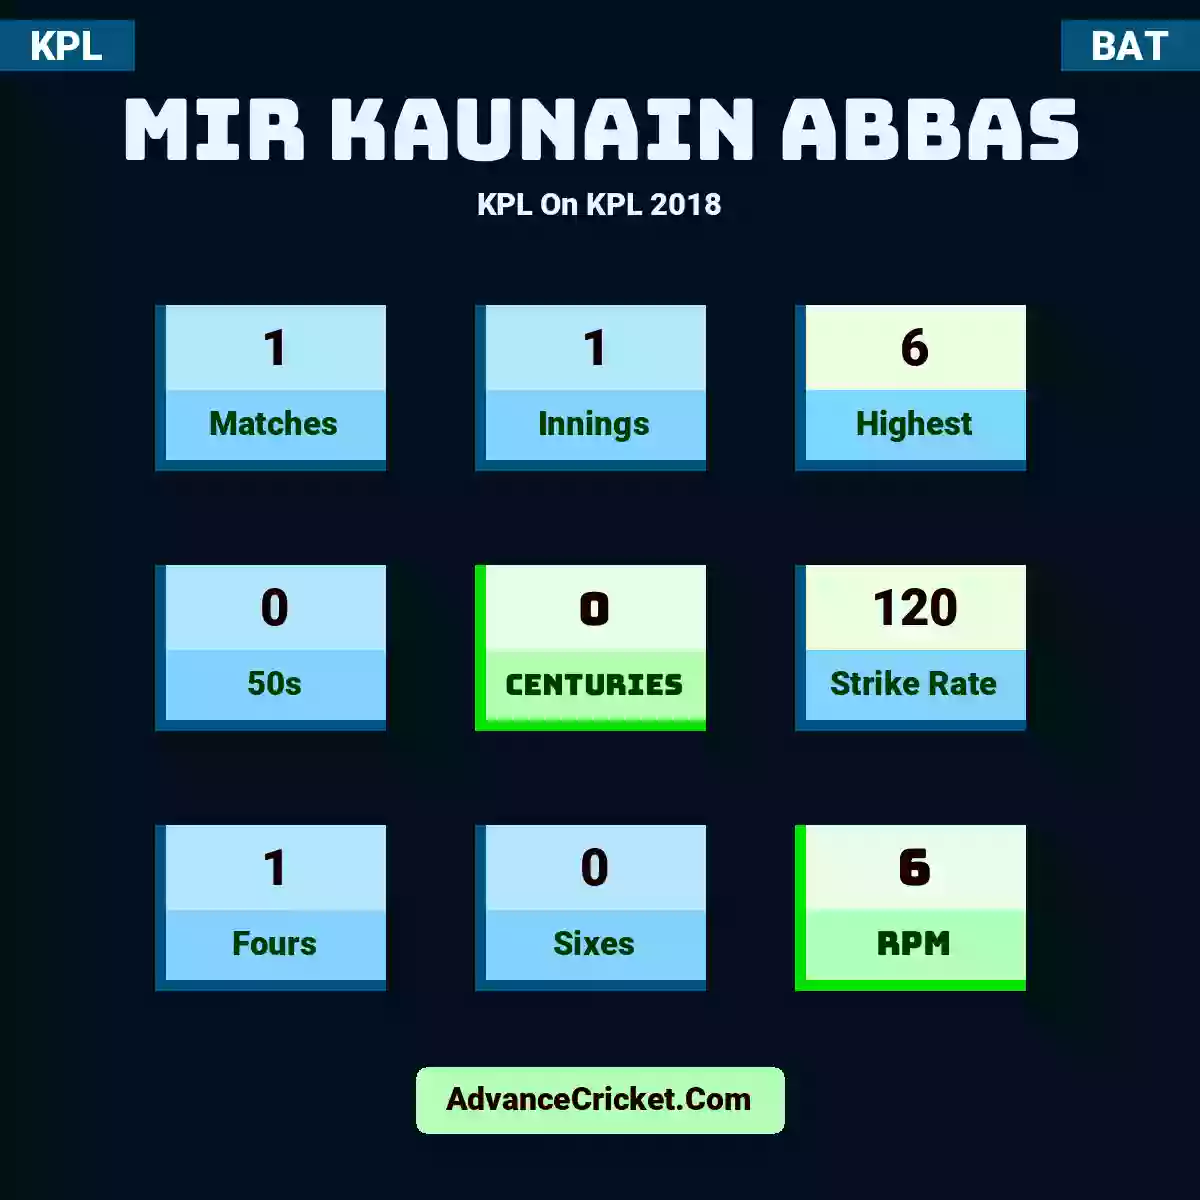 Mir Kaunain Abbas KPL  On KPL 2018, Mir Kaunain Abbas played 1 matches, scored 6 runs as highest, 0 half-centuries, and 0 centuries, with a strike rate of 120. M.Abbas hit 1 fours and 0 sixes, with an RPM of 6.